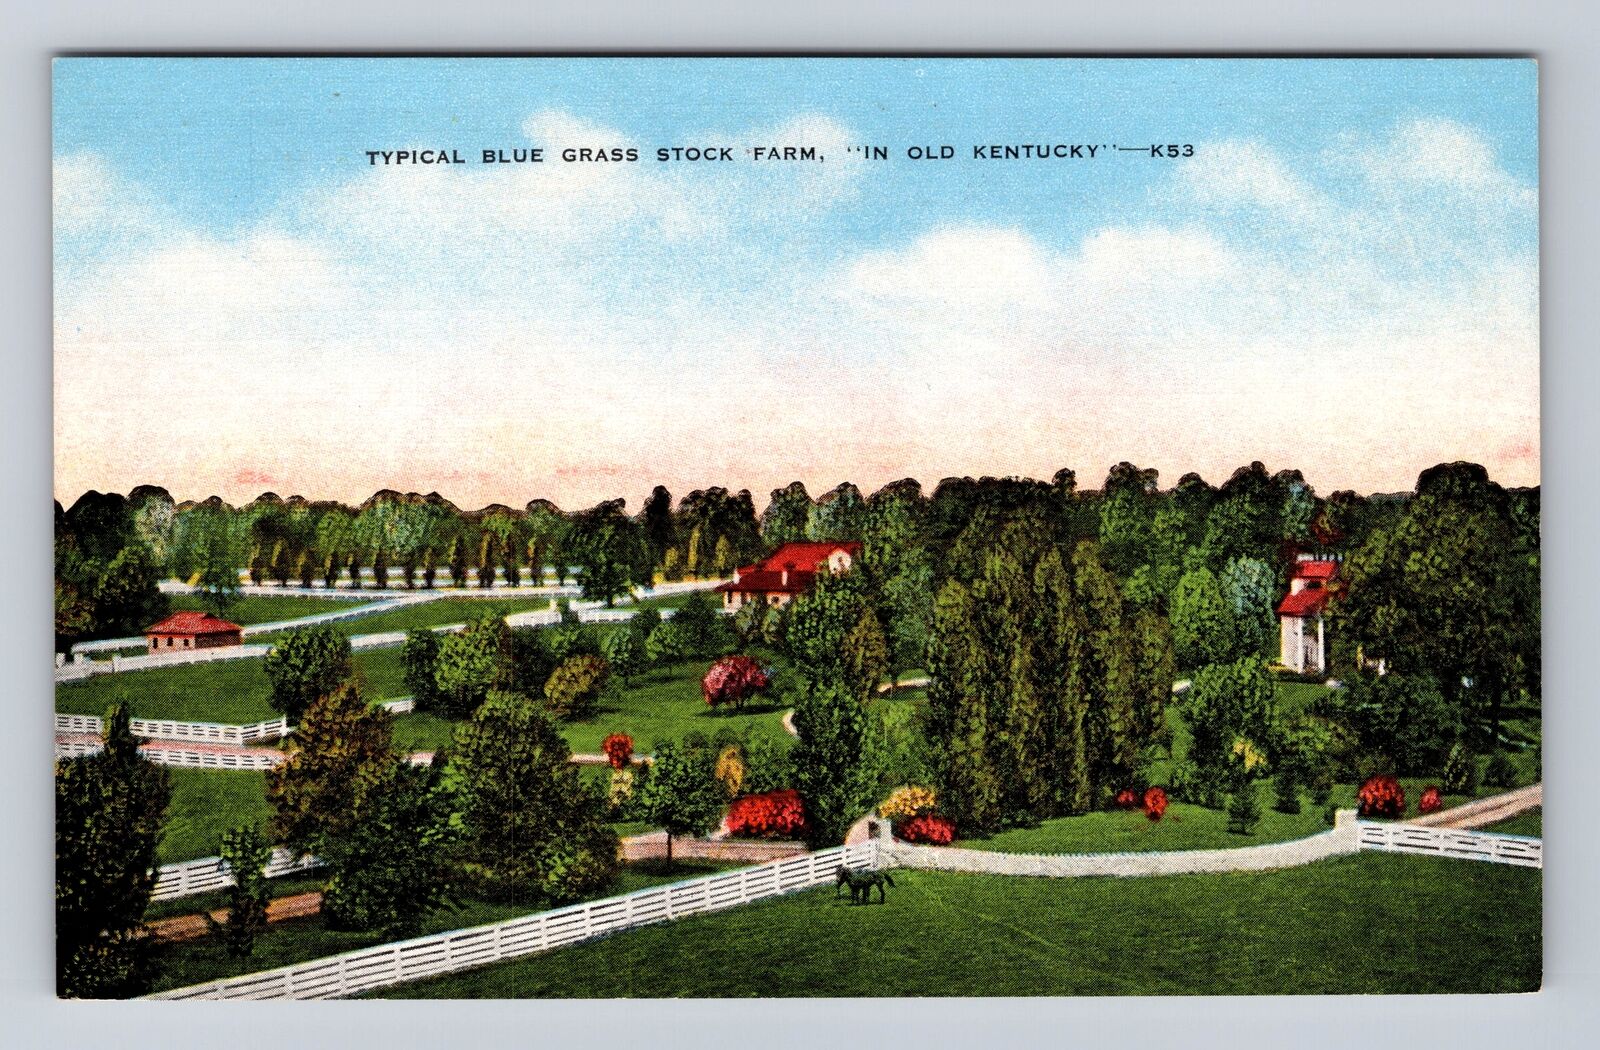 KY-Kentucky, Typical Blue Grass Stock Farm in Kentucky Souvenir Vintage Postcard